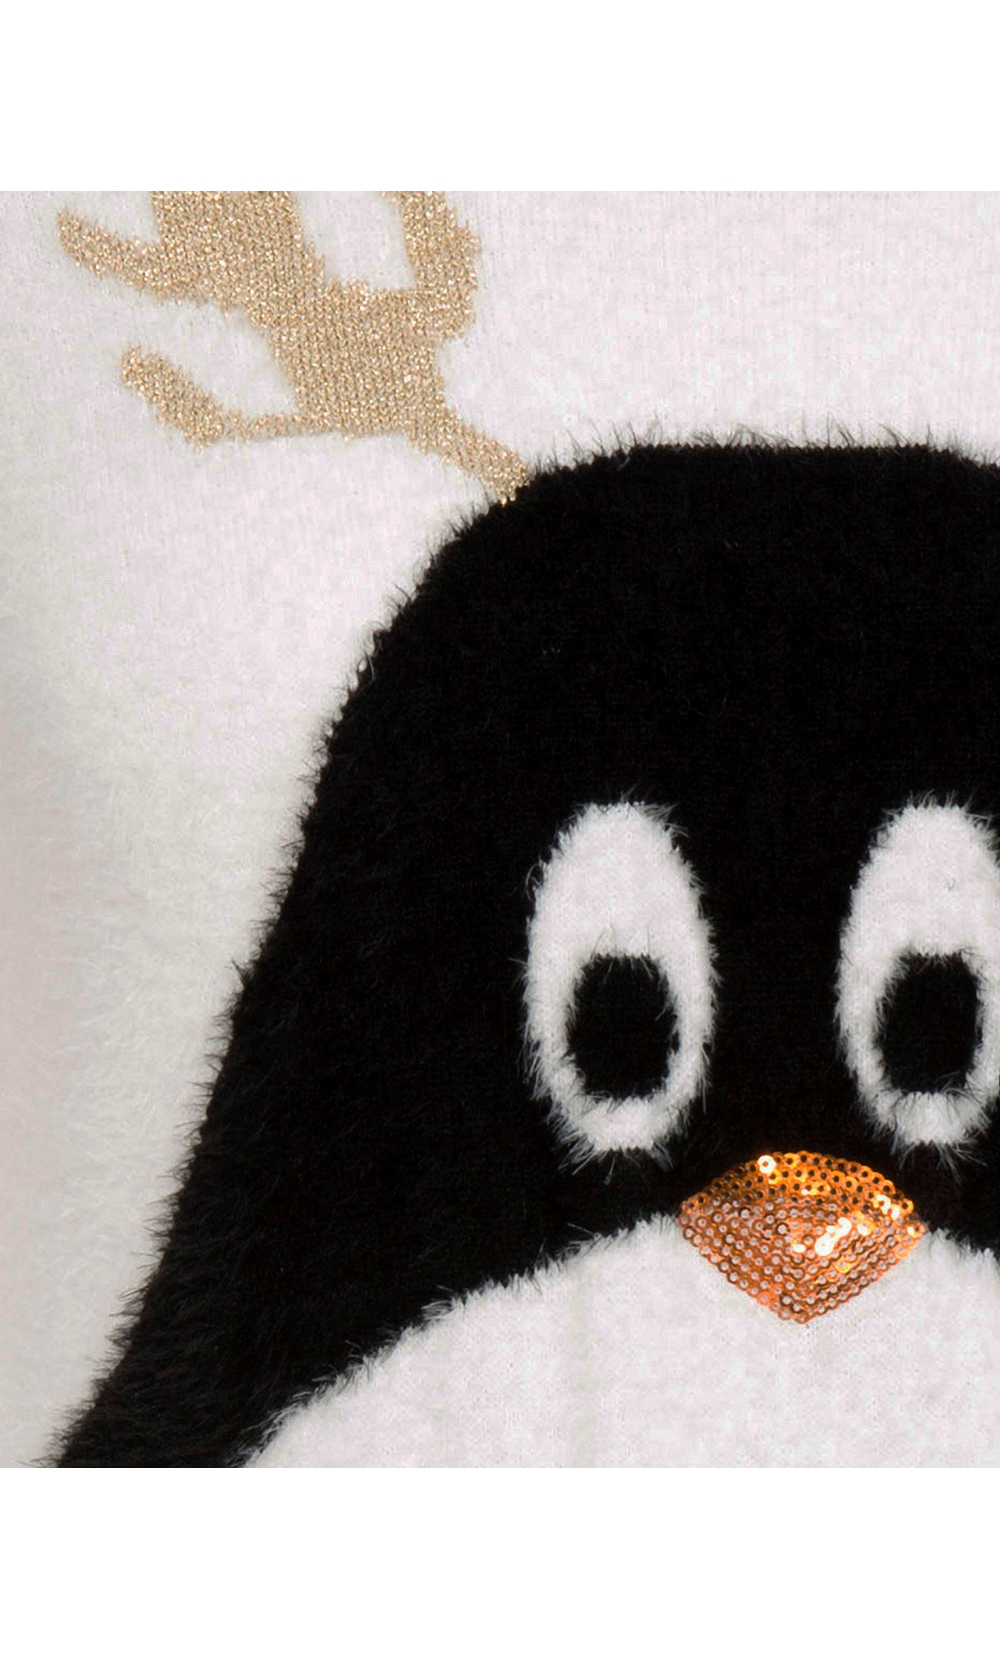 Penguin Design Long Sleeve Knit Top